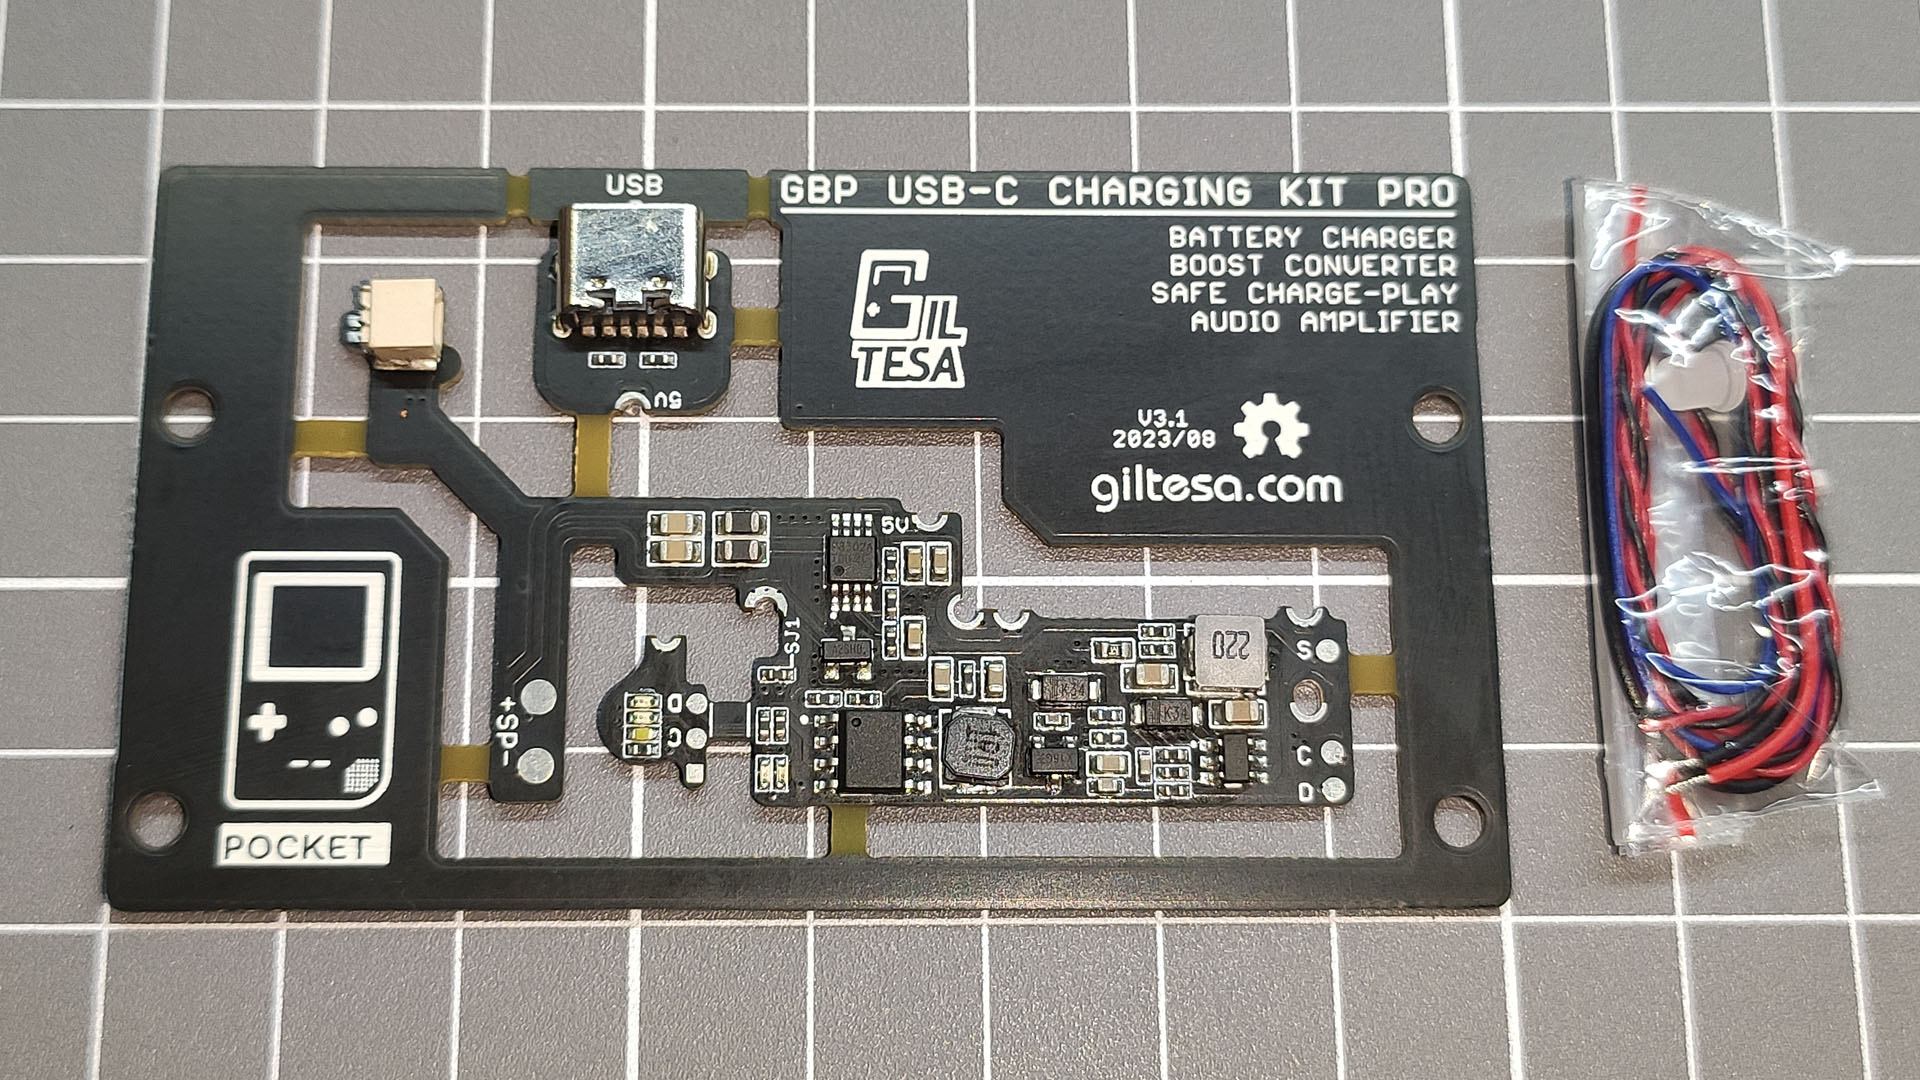 Game Boy Advance SP: USB-C Kit (Centered) - The giltesa's shop